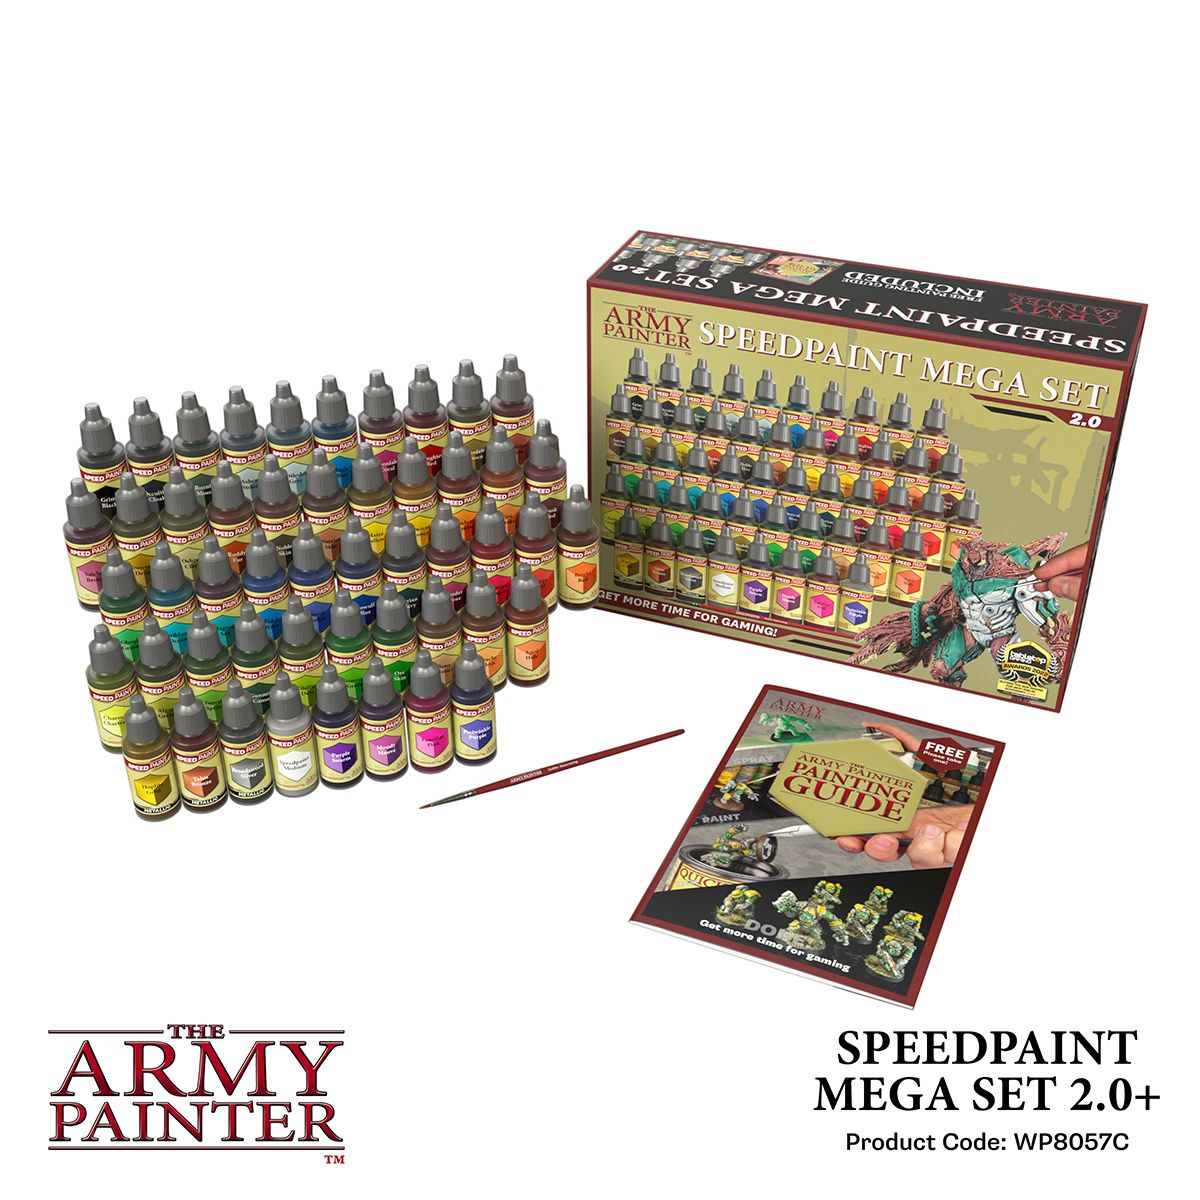 Full Army Painter Speedpaint Range Available Now!